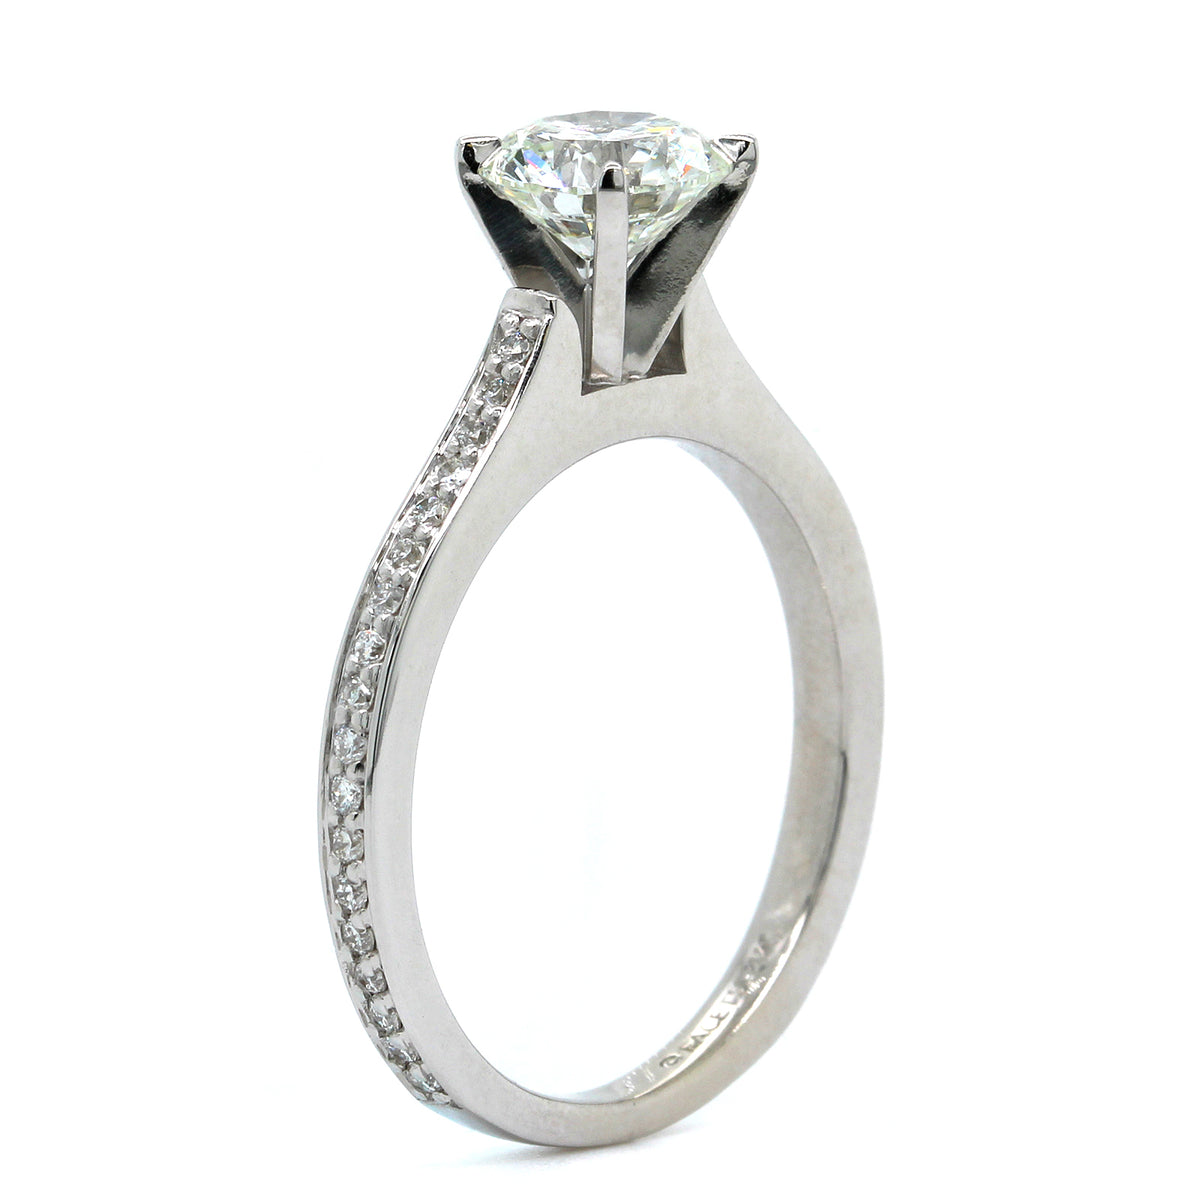 14K White Gold 4 Prong Round Diamond Engagement Ring